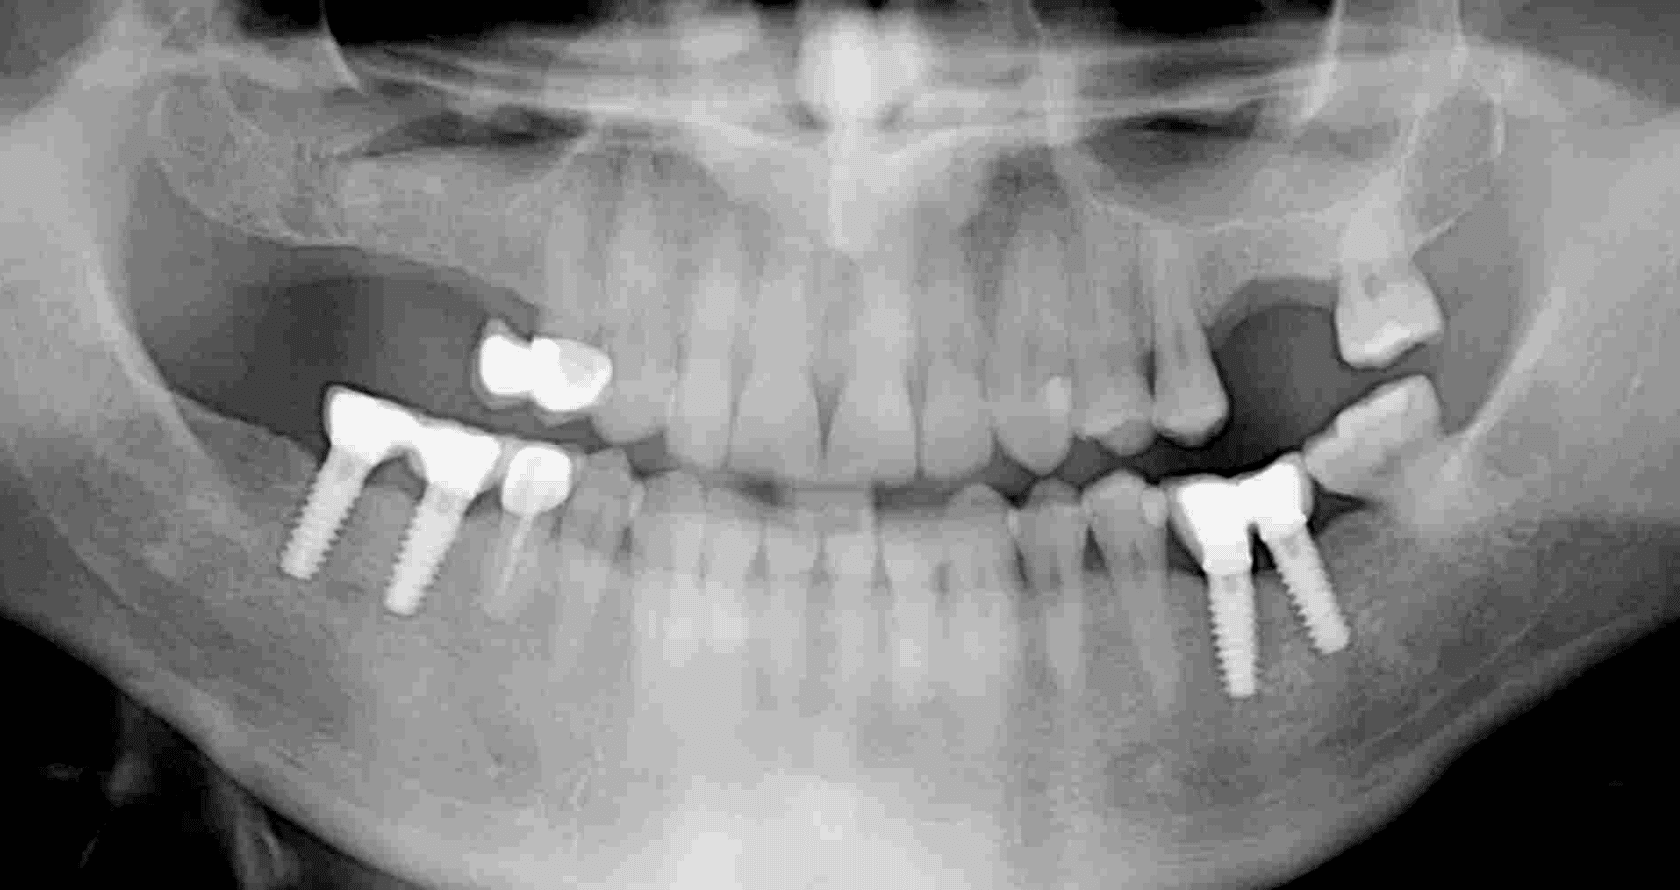 ortopantomografia ausencias maxilar superior